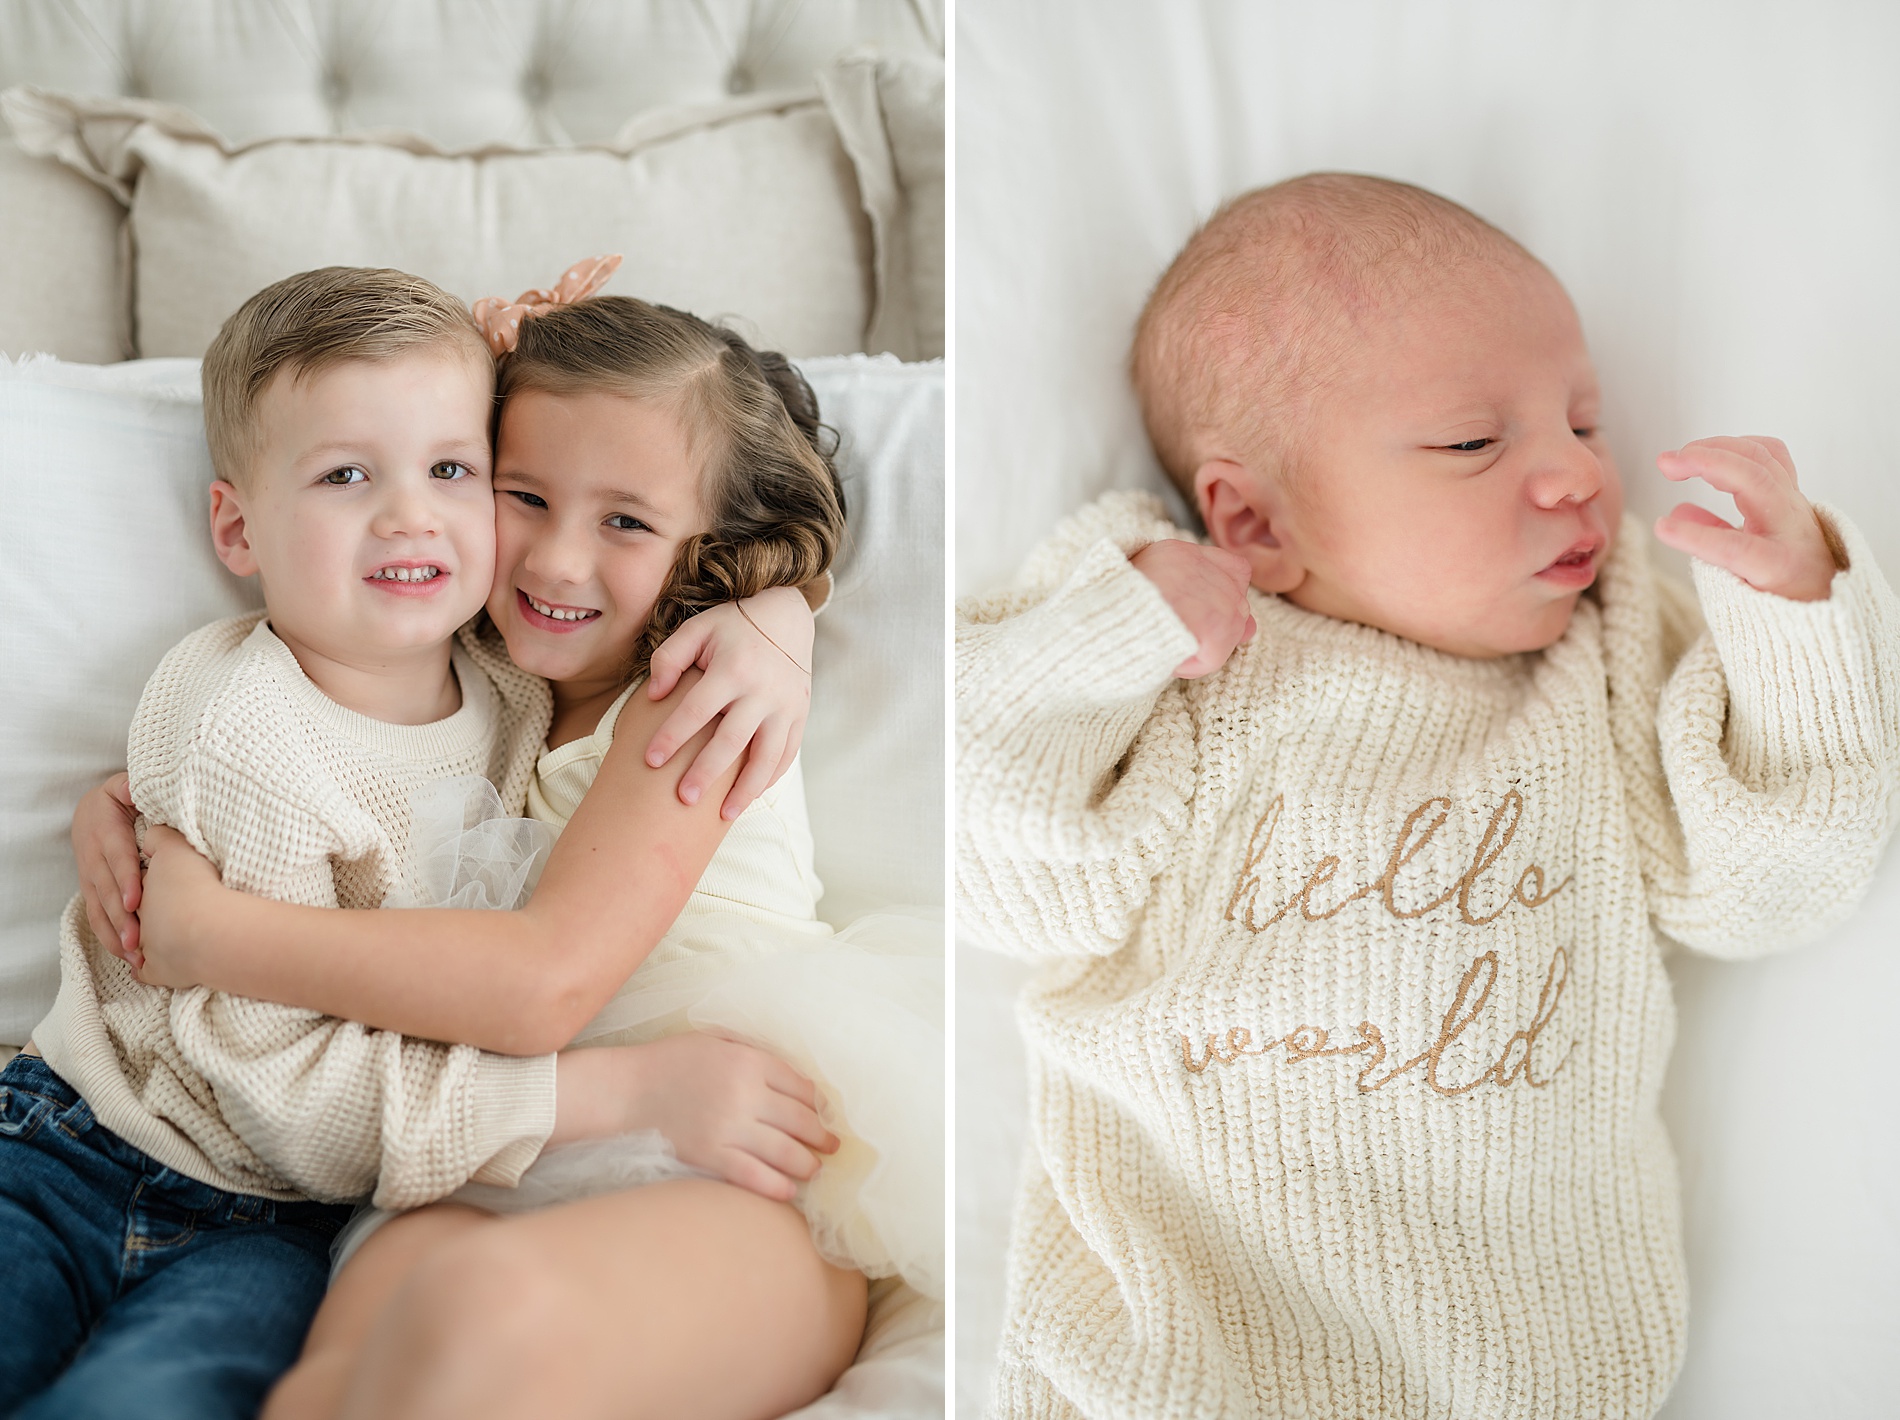 How to Prepare Siblings For Newborn Photos | siblings with newborn sibling  taken by Lindsey Dutton Photography, a Dallas newborn photographer
